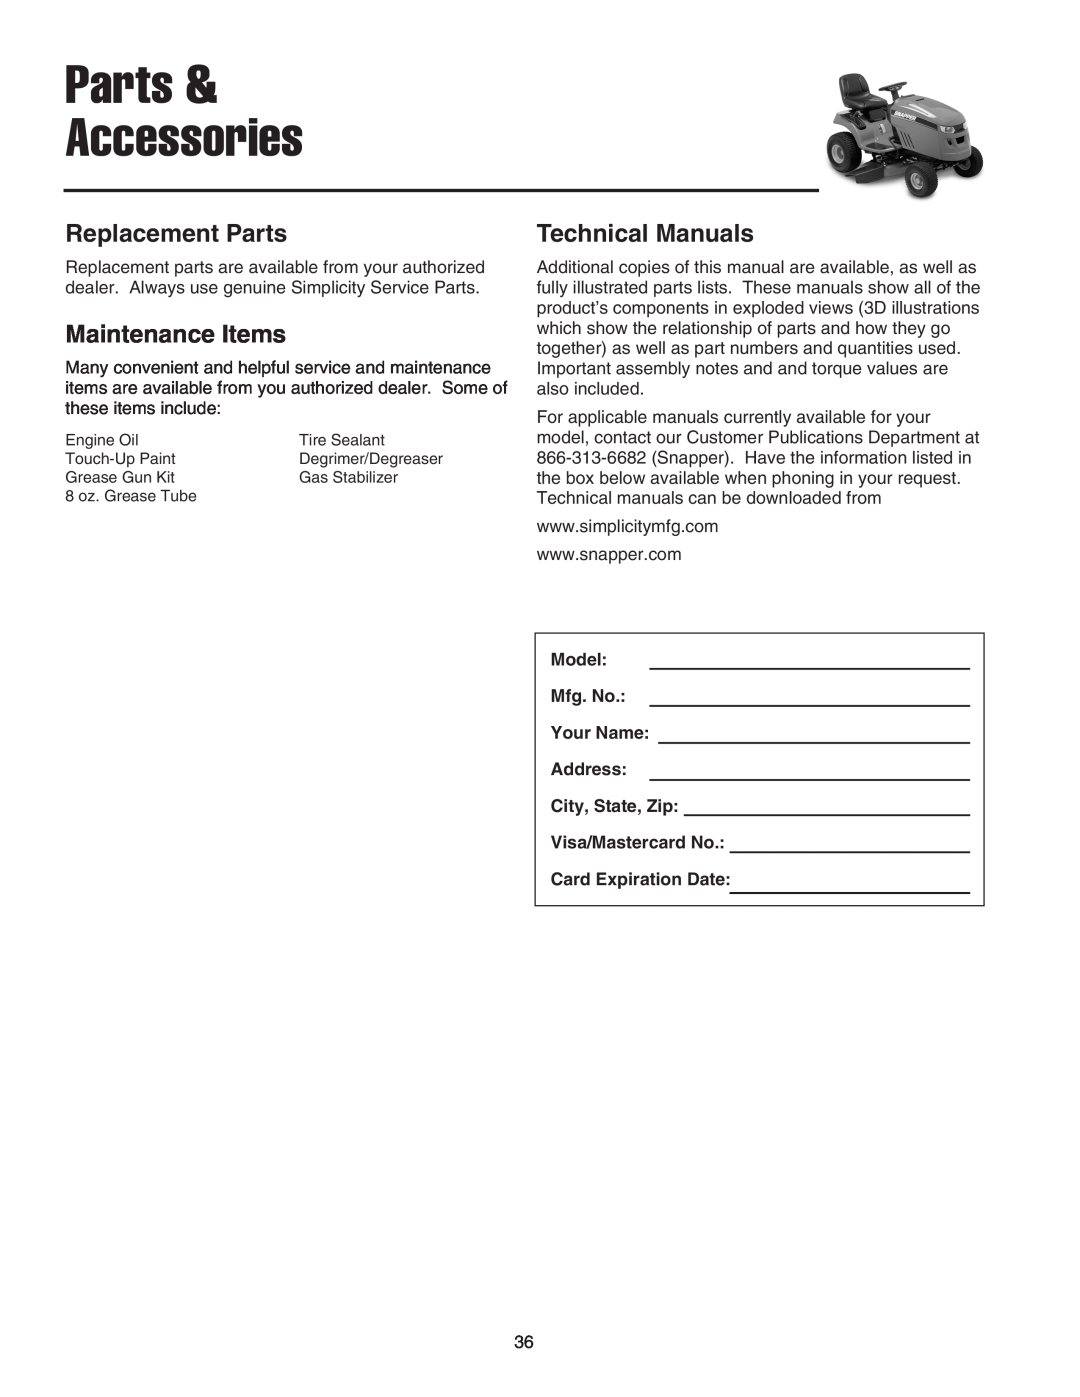 Snapper LT-200 manual Replacement Parts, Maintenance Items, Technical Manuals, Parts & Accessories 